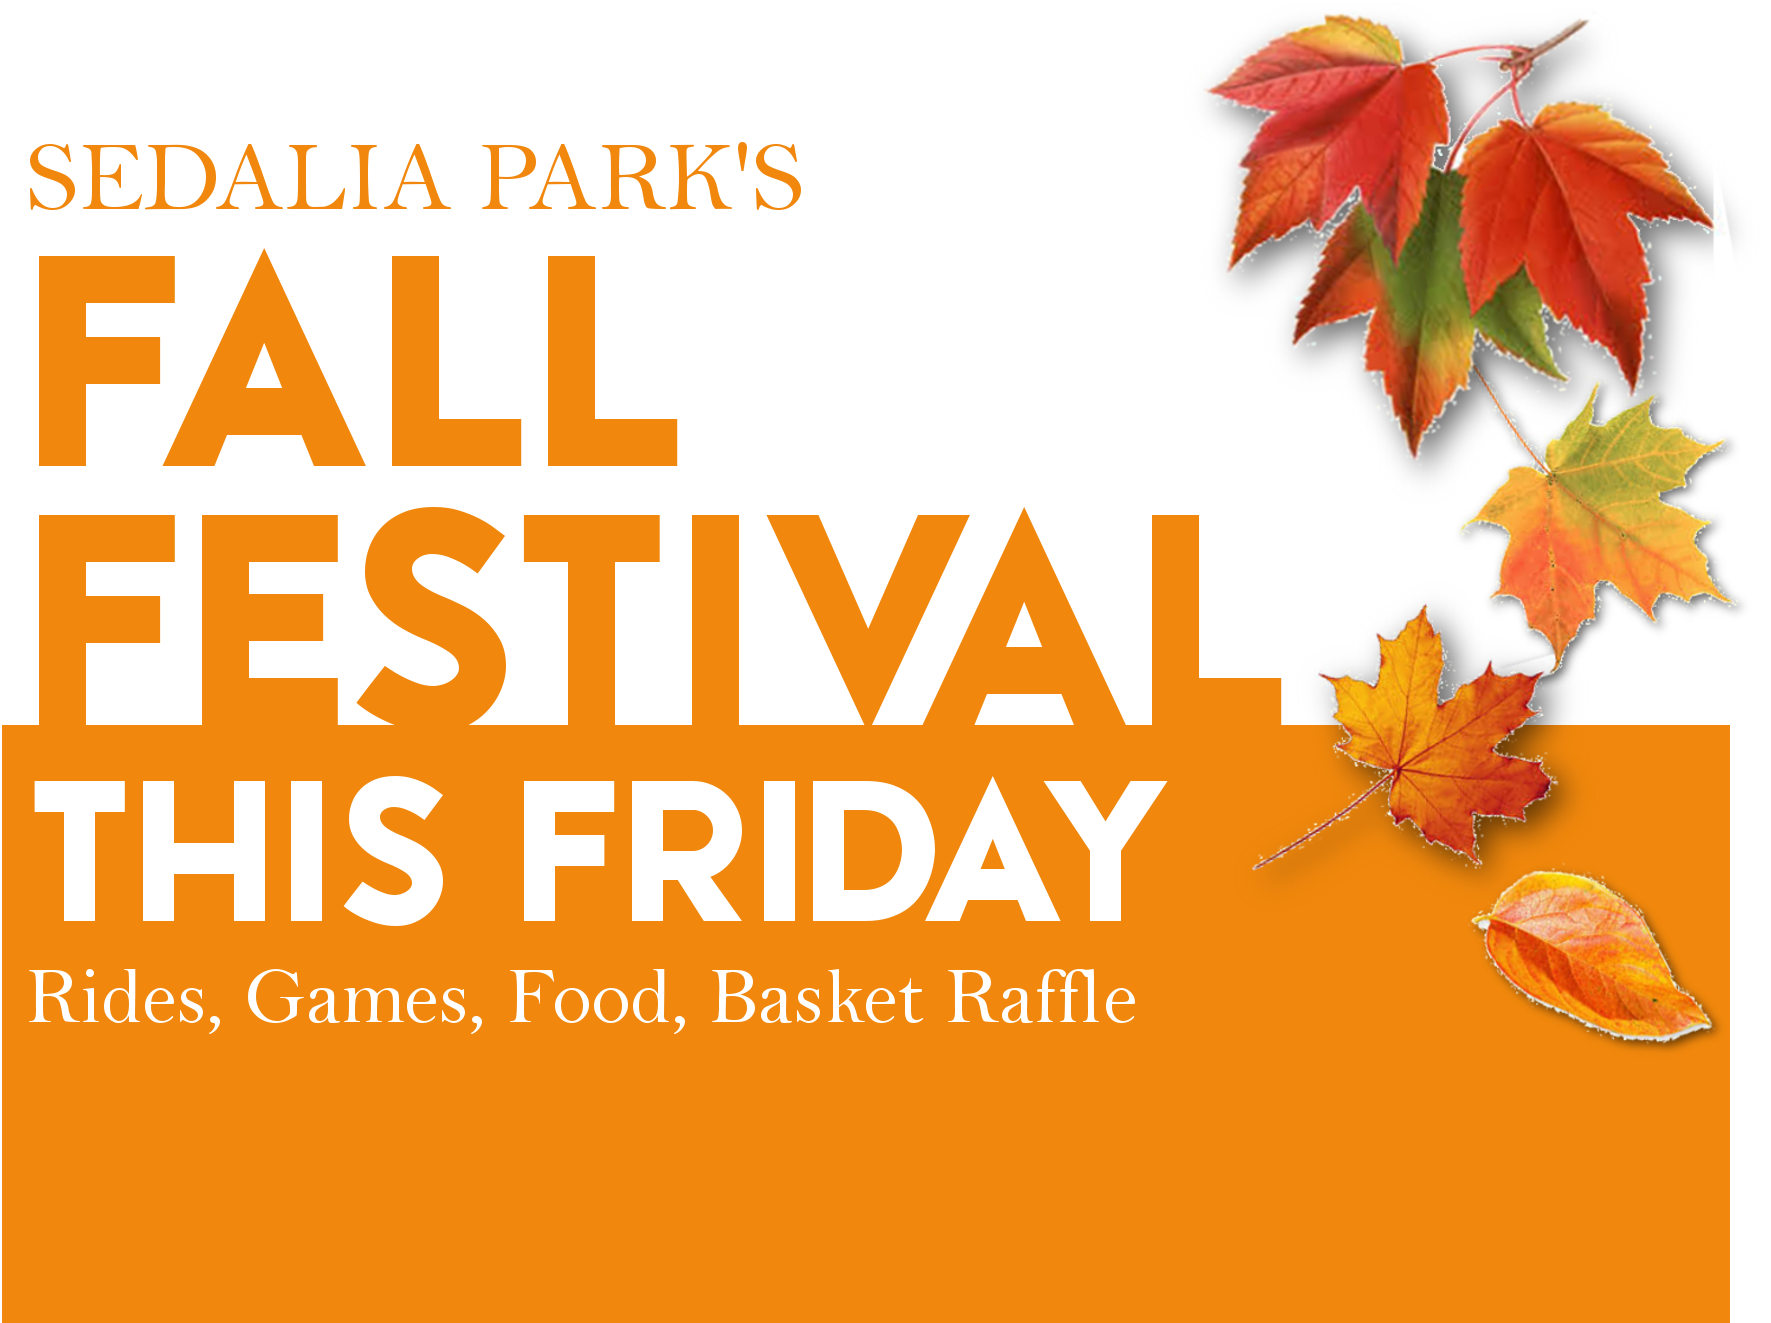 Sedalia Park's Fall Festival